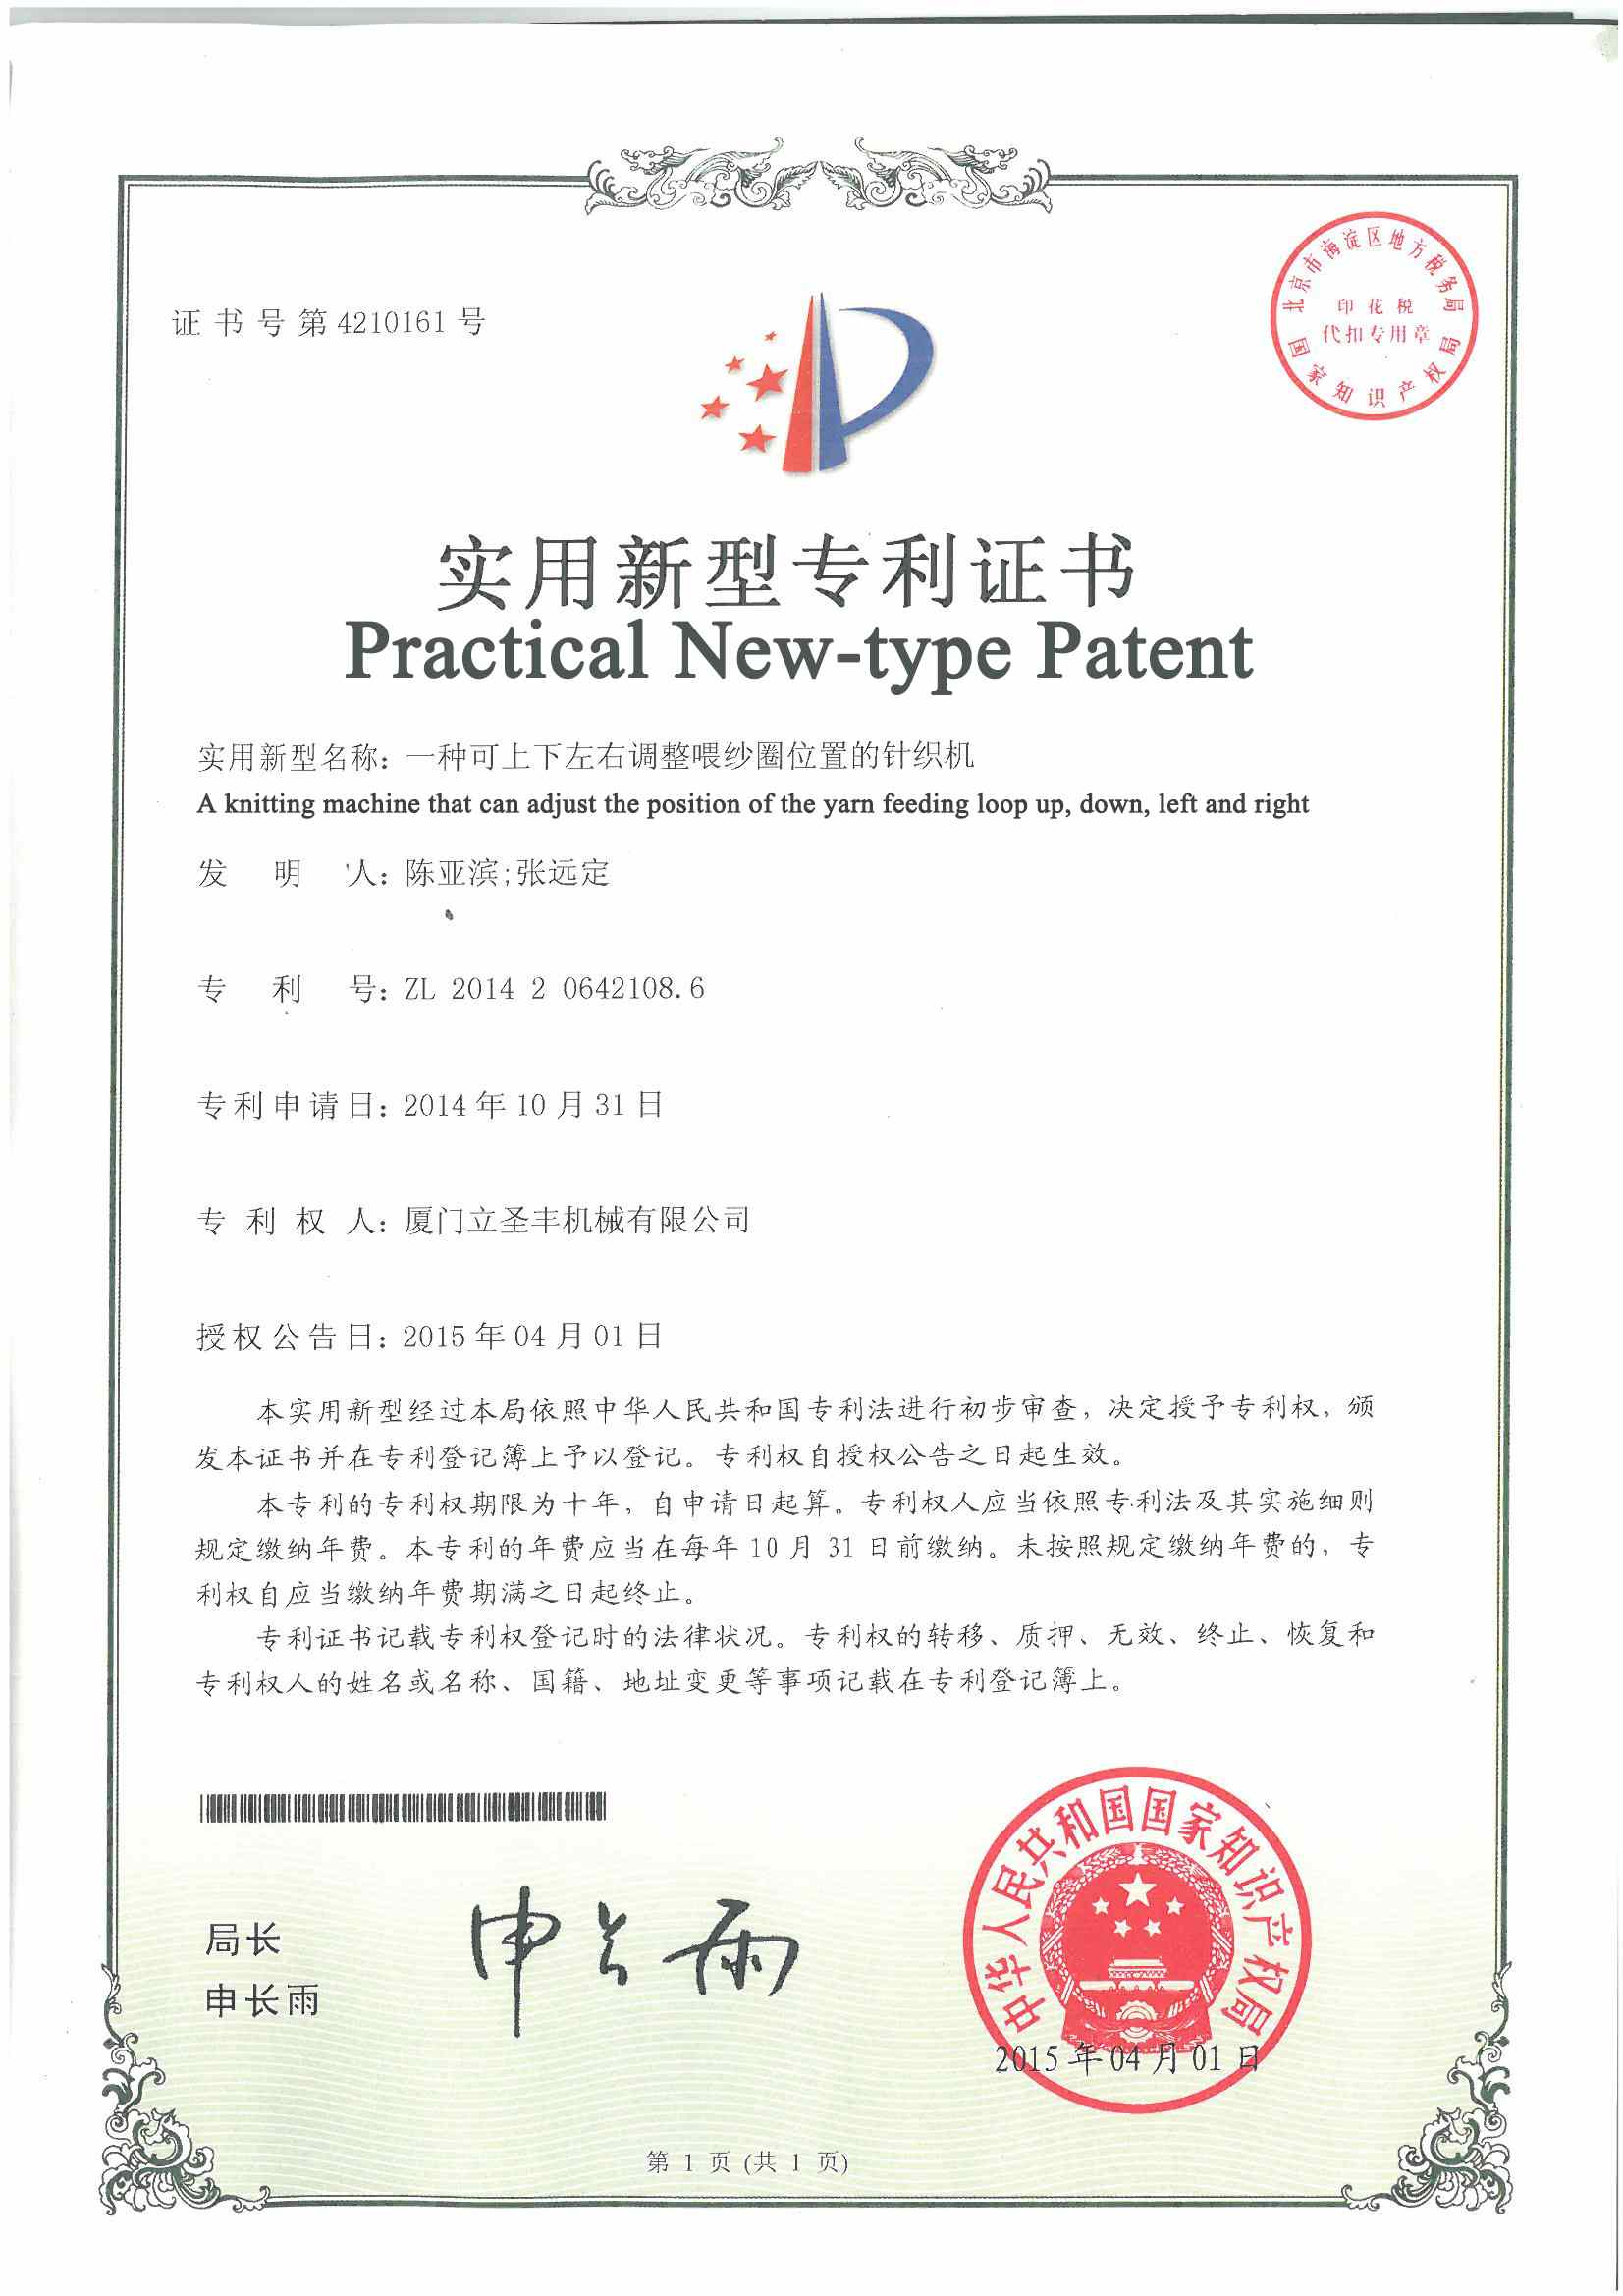 Patents